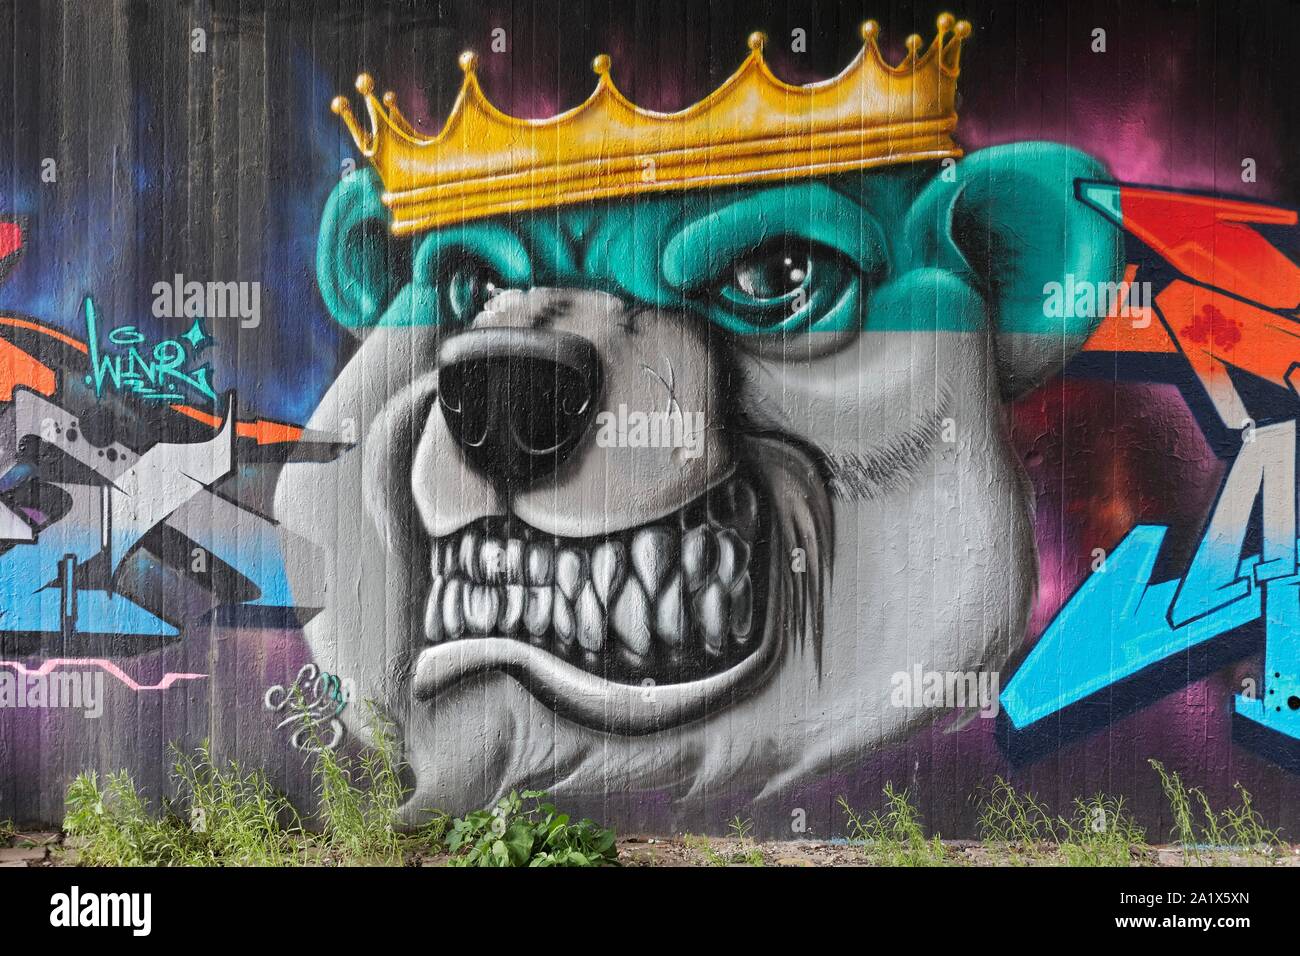 Graffiti, head of a bear with golden crown, bared teeth, Neuss, North Rhine-Westphalia, Germany Stock Photo